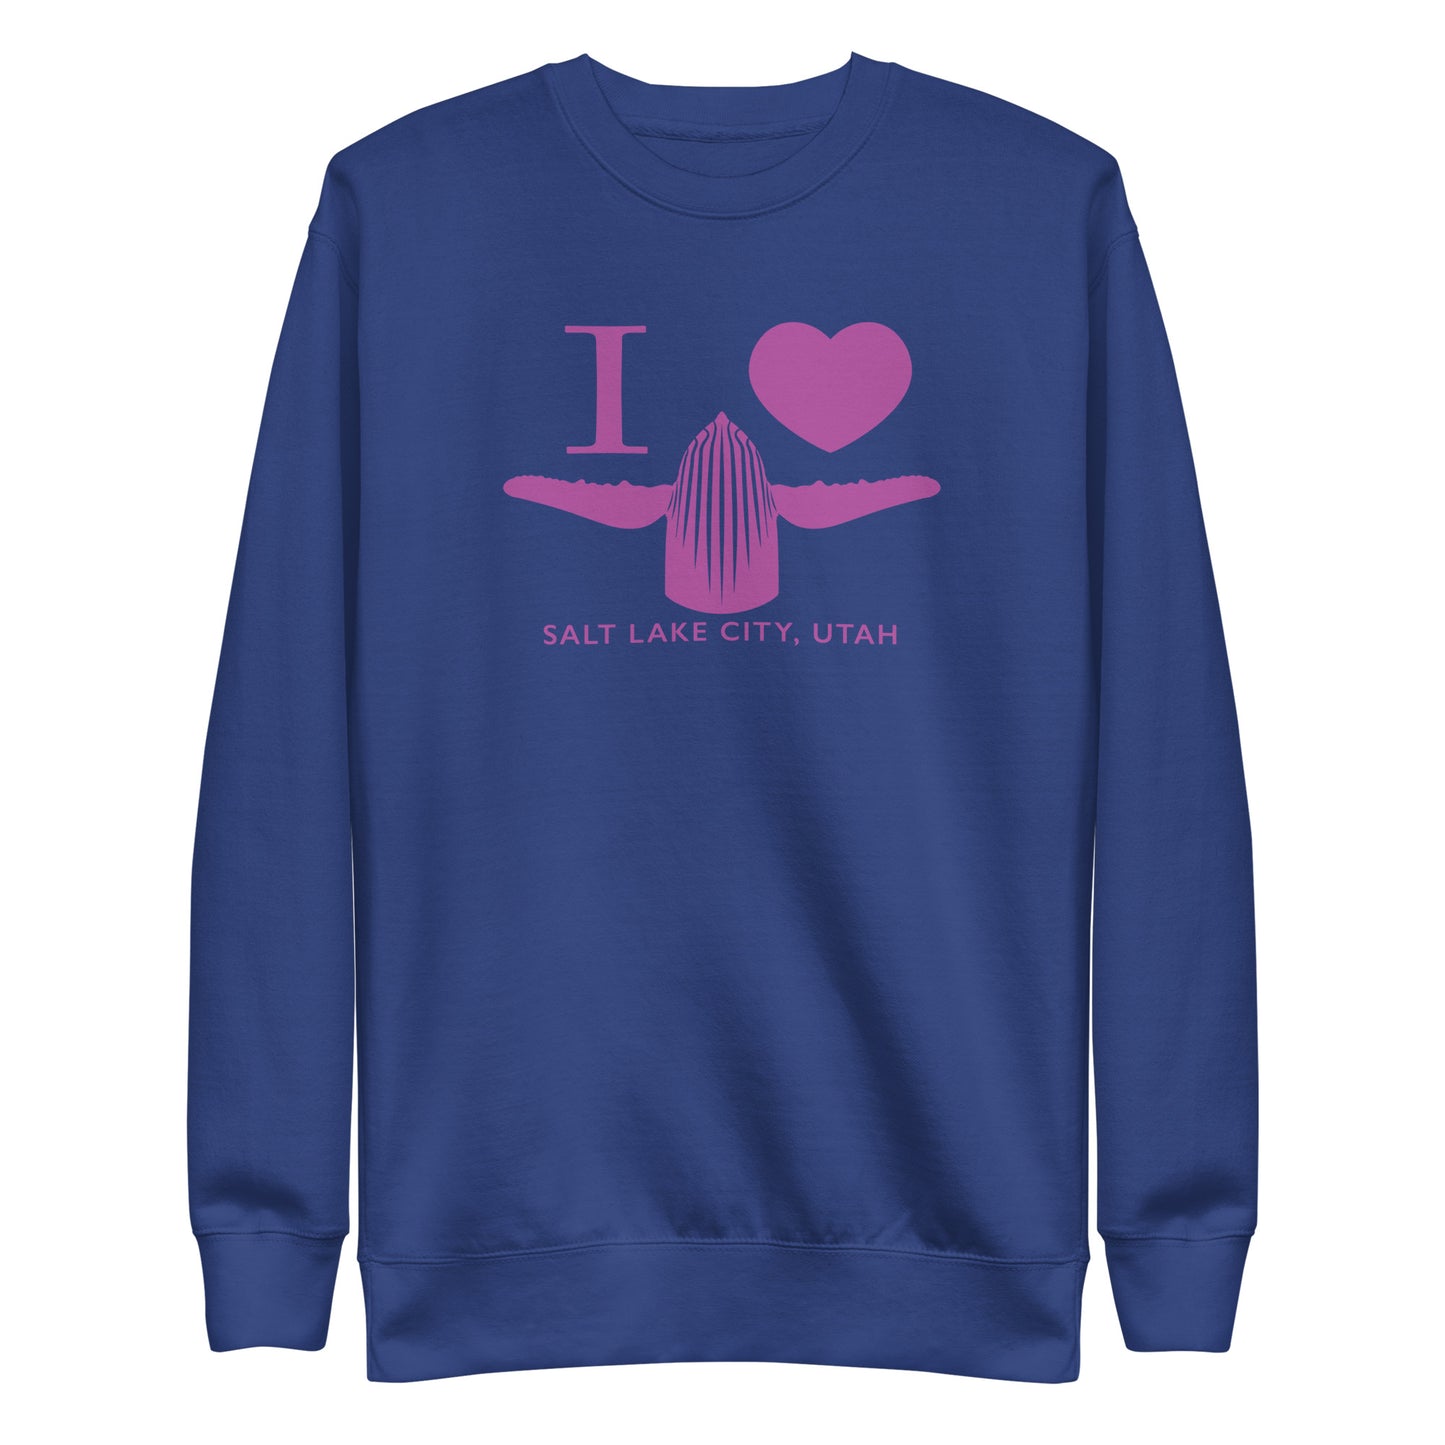 I HEART WHALE: Sweatshirt